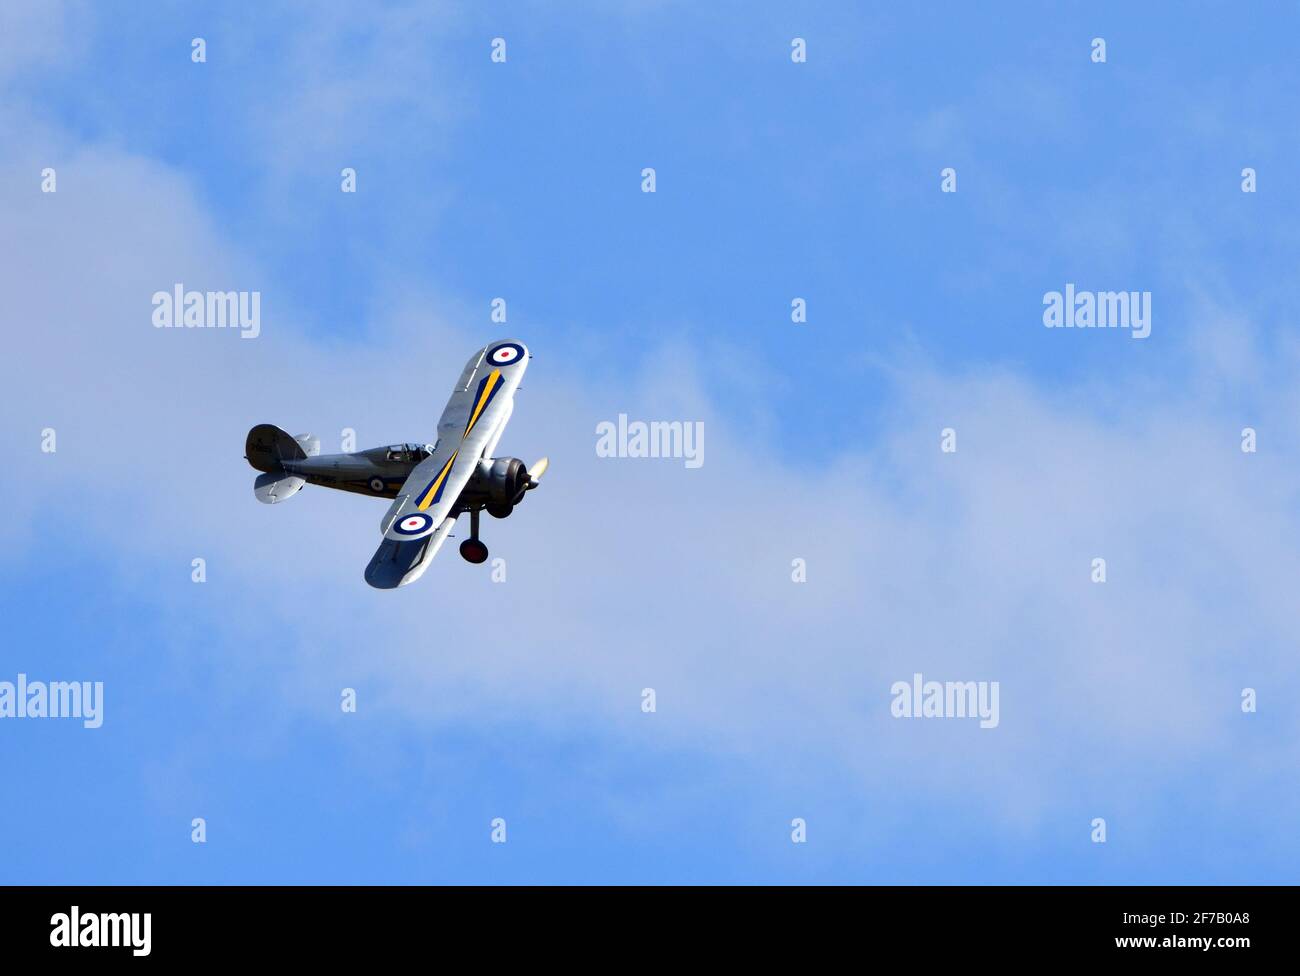 ICKWELL, BEDFORDSHIRE, ANGLETERRE - 02 AOÛT 2020 : avion Gladiator d'époque Gloster en vol avec ciel bleu et nuages Banque D'Images